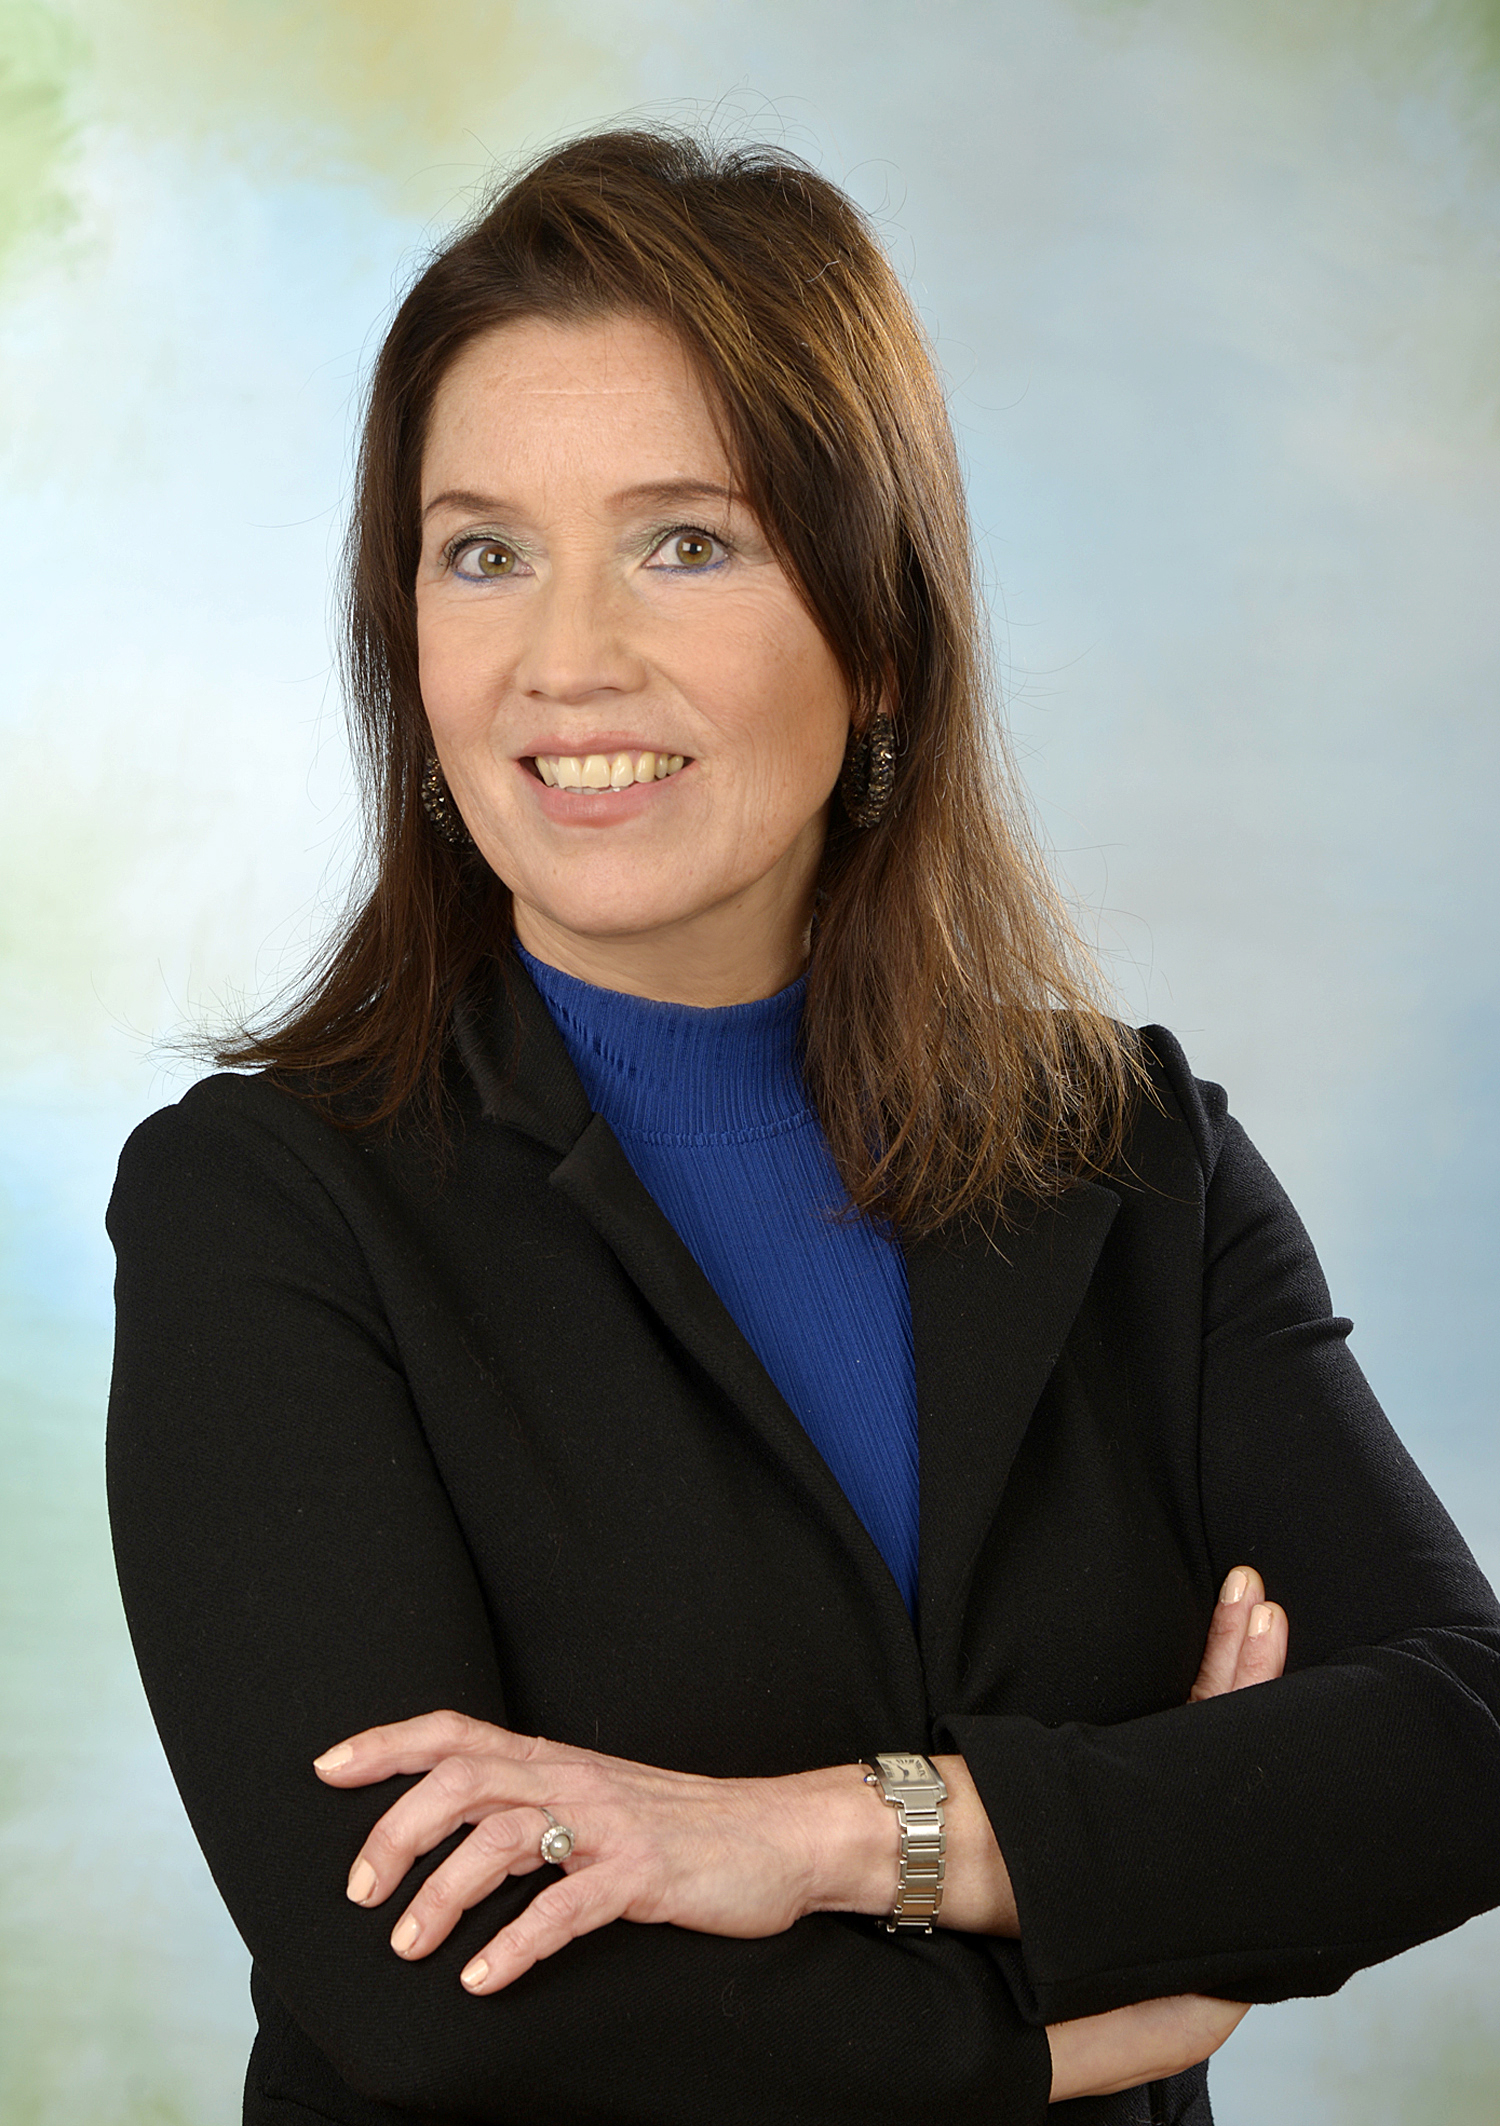 Karin Jacobs, D66 EP